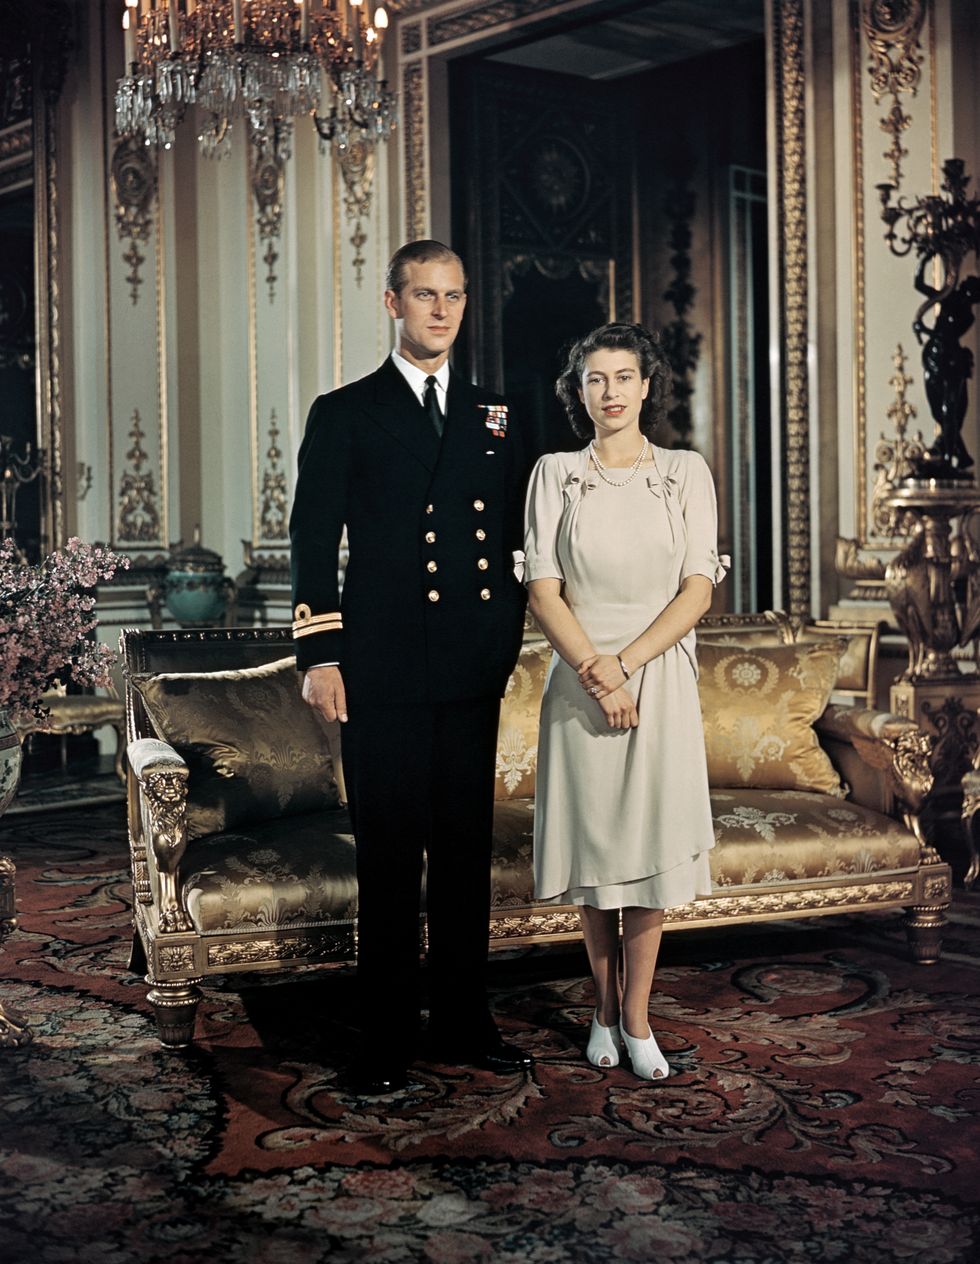 Prince Phillip and Queen Elizabeth in 1947